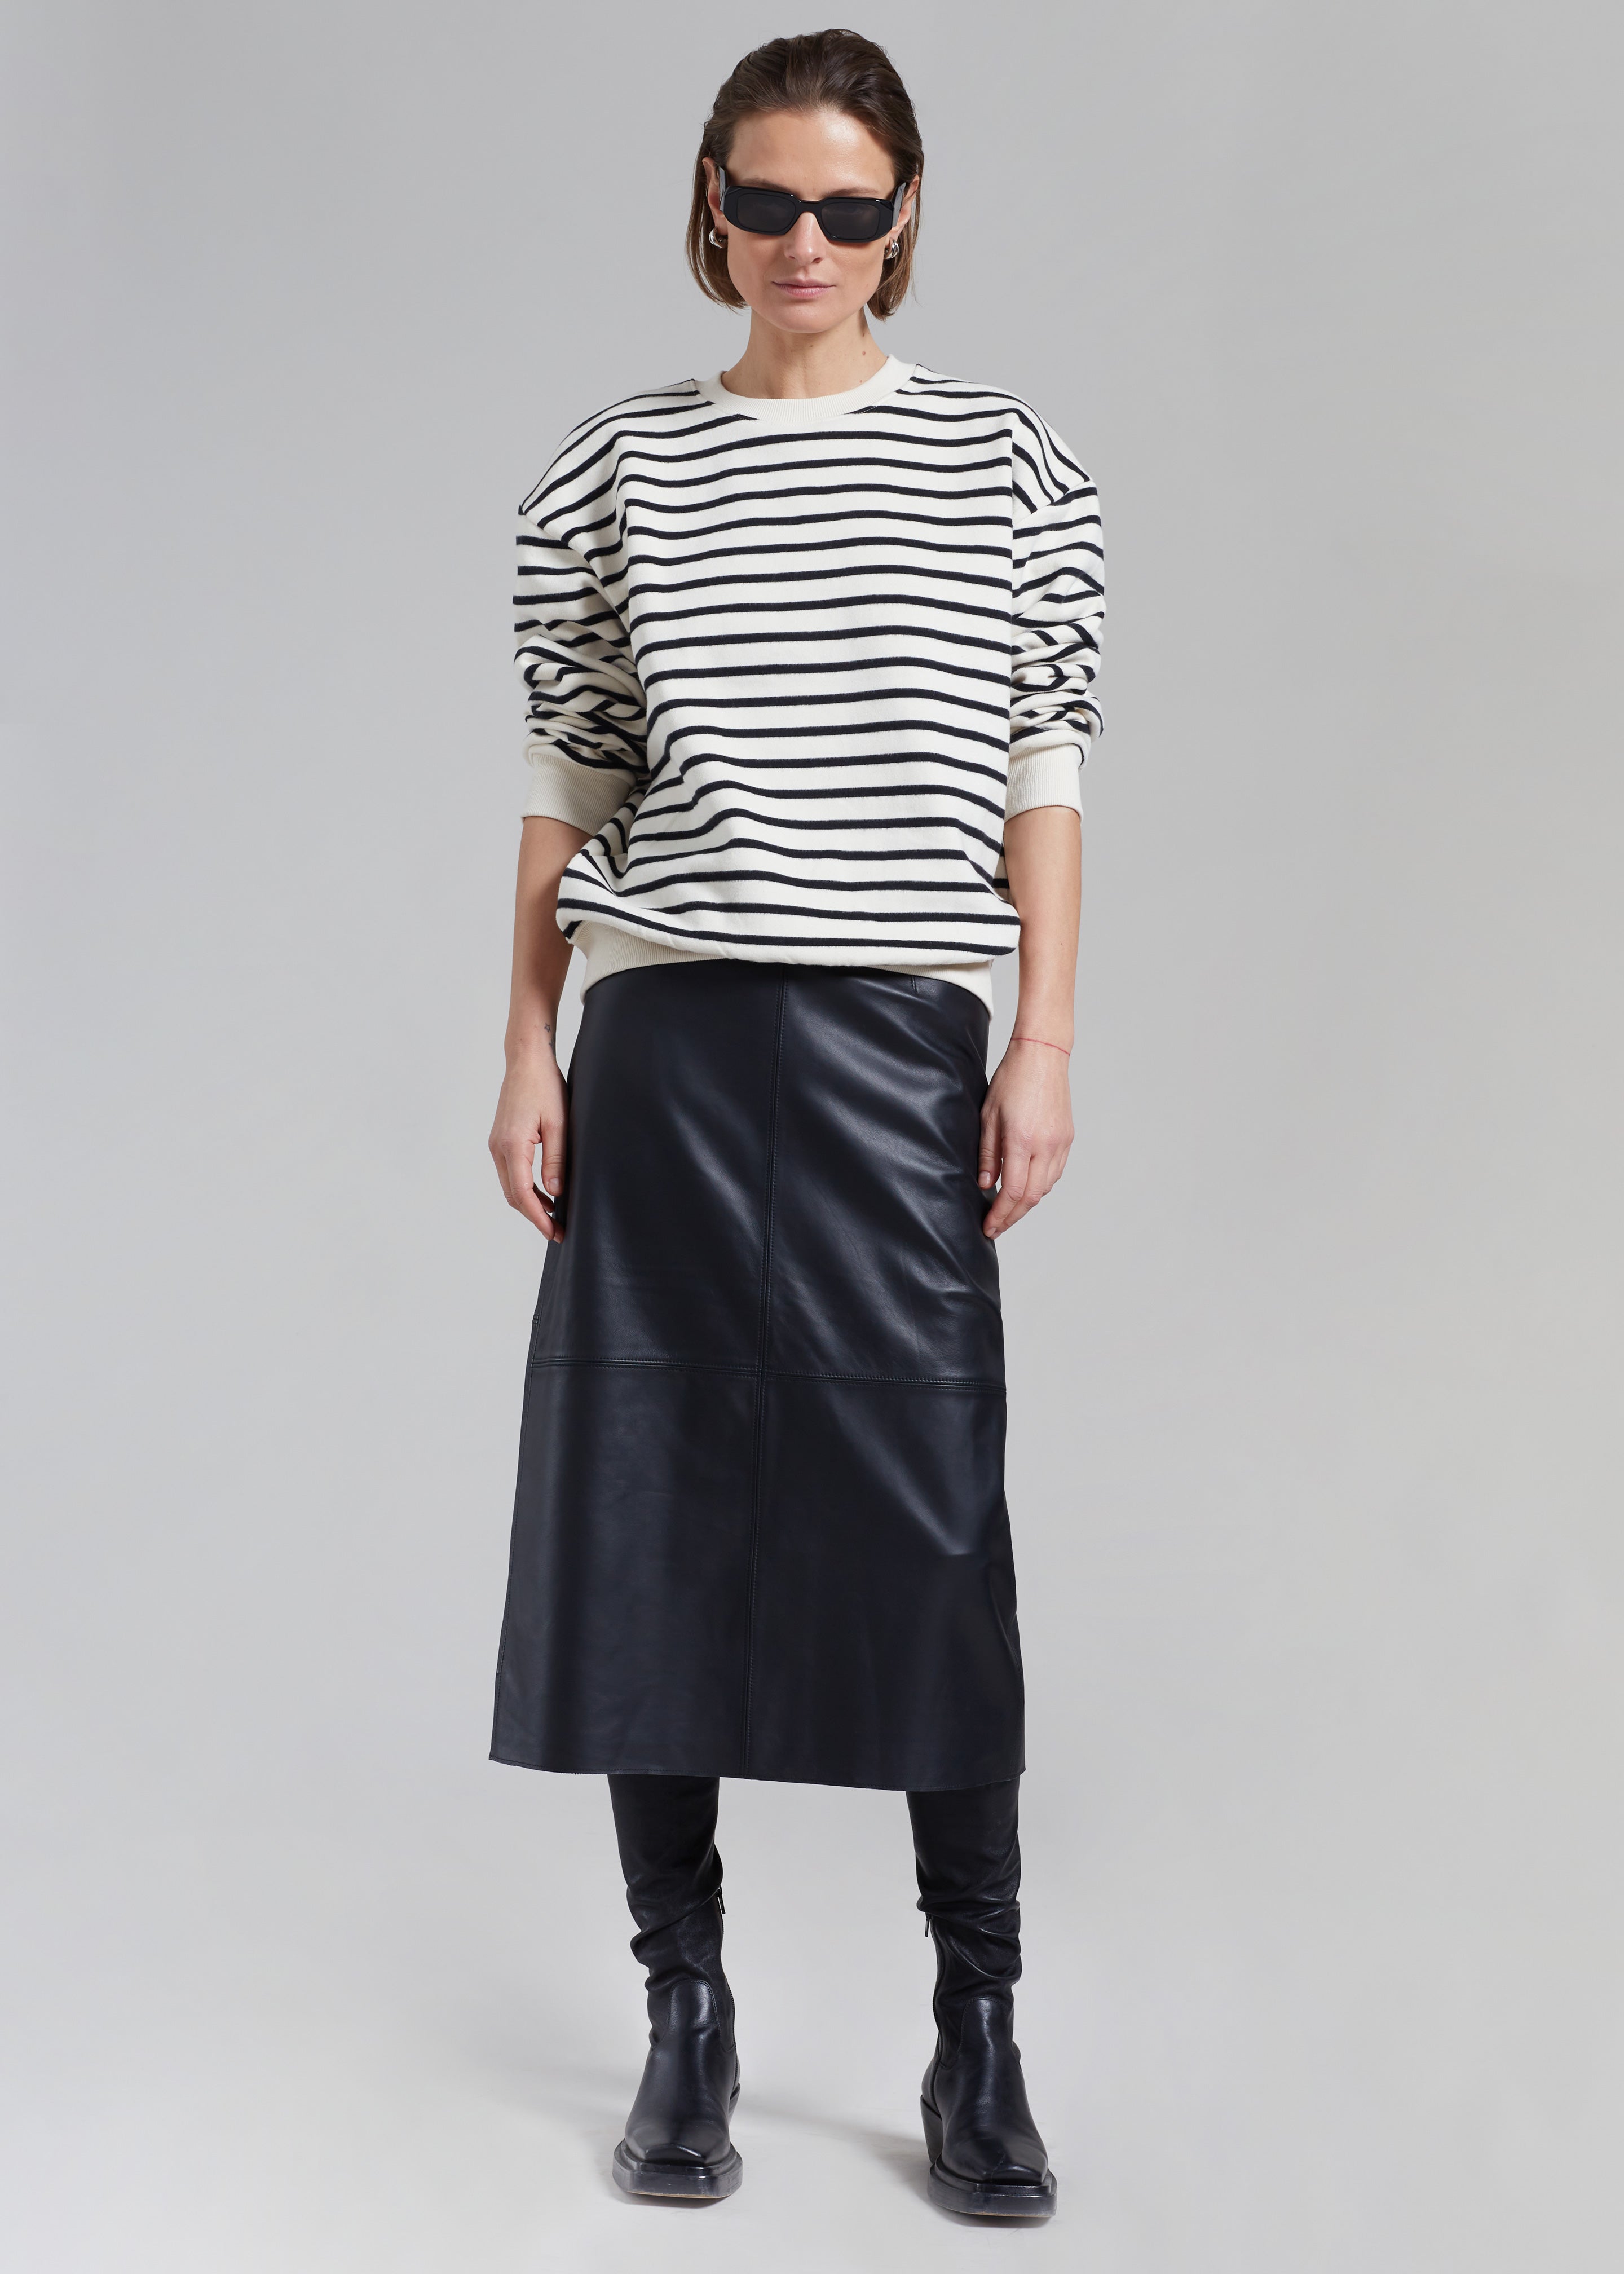 Saint Stripe Sweater - Black/White Stripe - 6